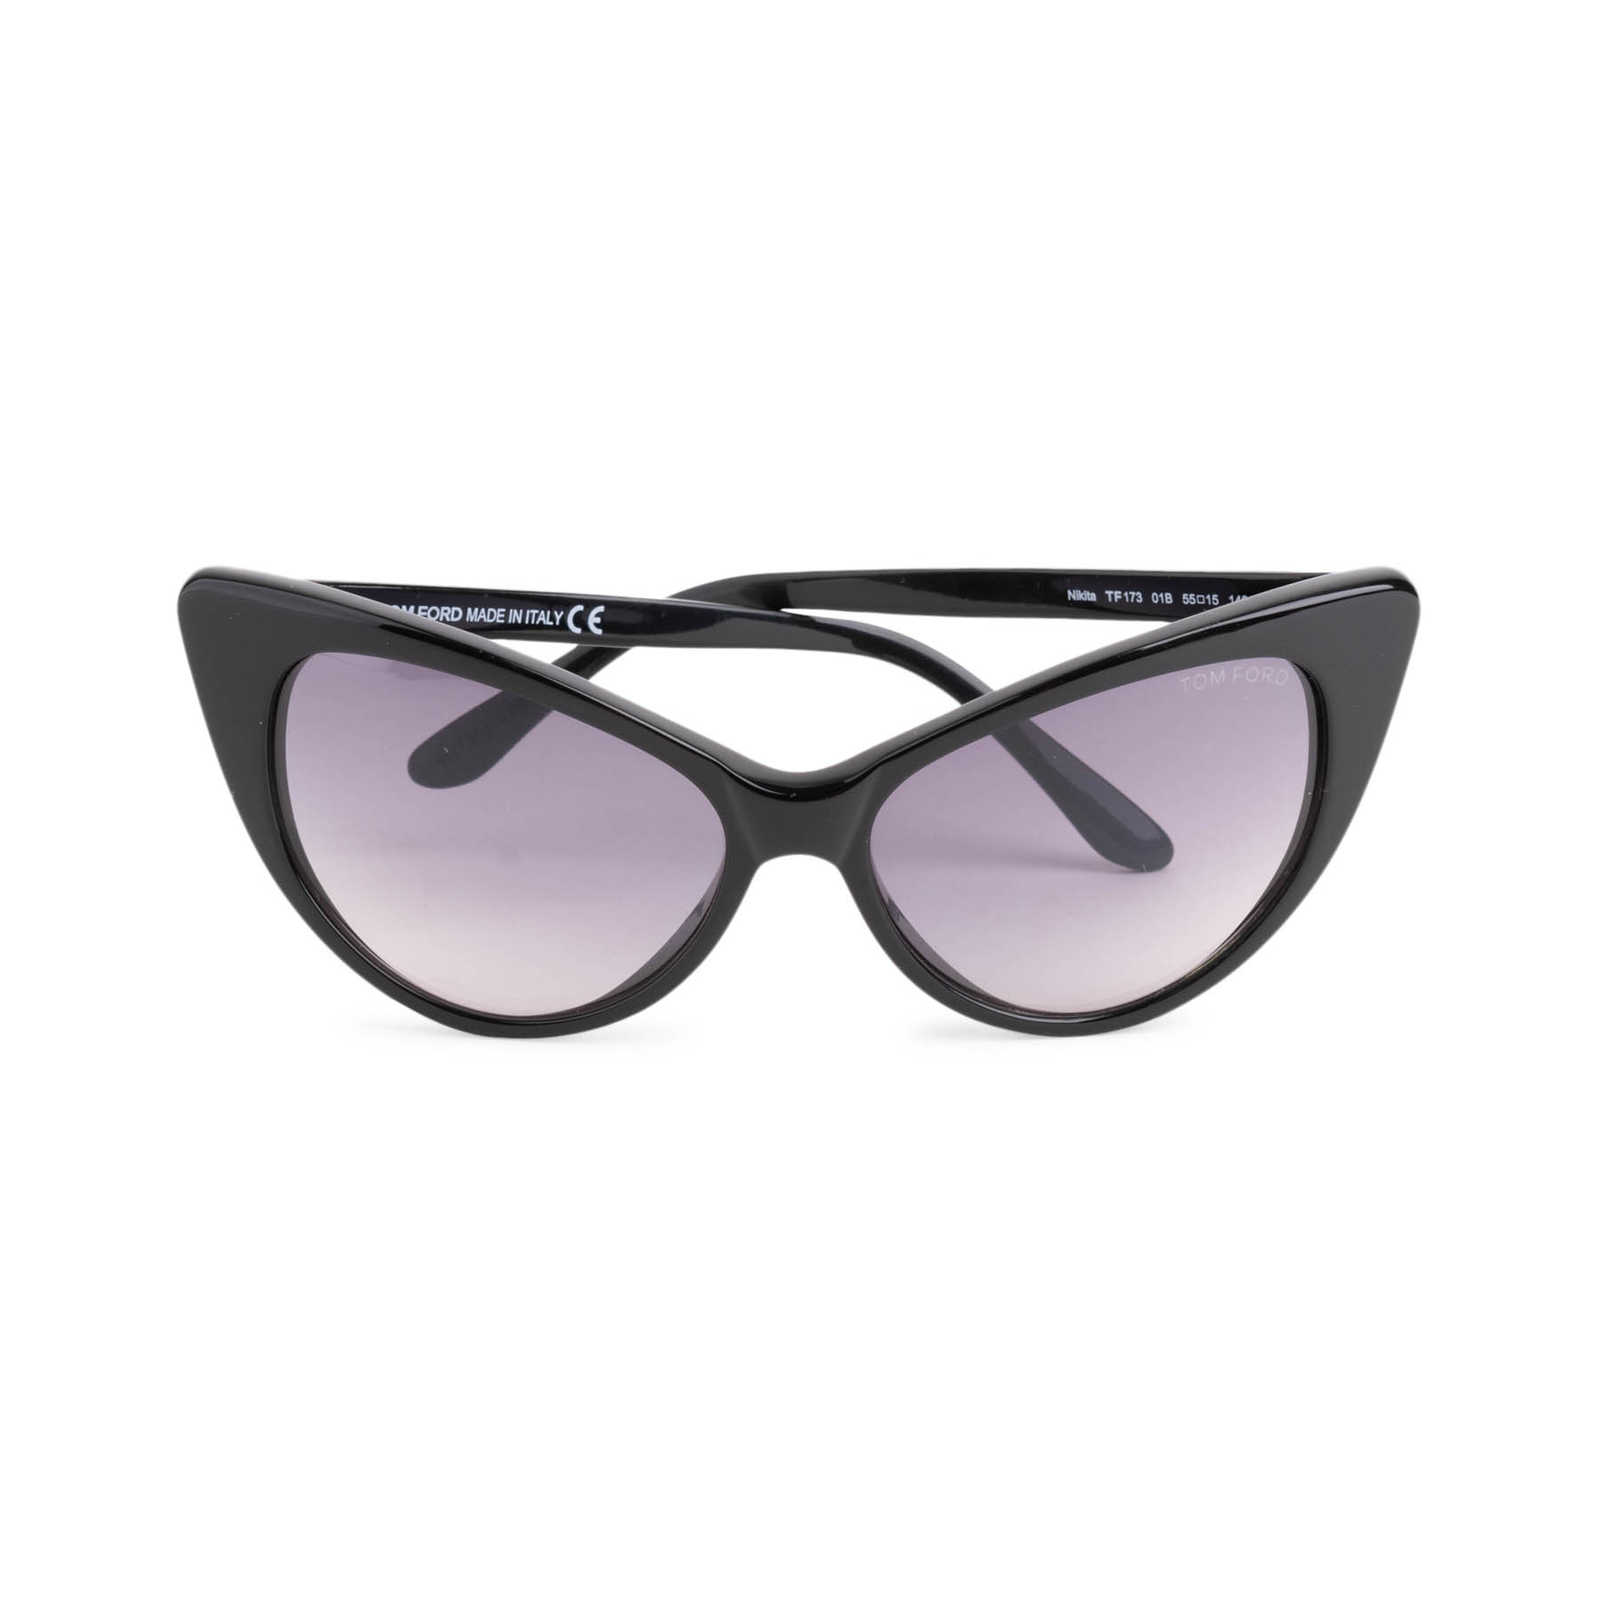 Cat-Eyes Sunglasses / Eyeglasses Summer 2012 Fashion Trend - Sunglasses ...